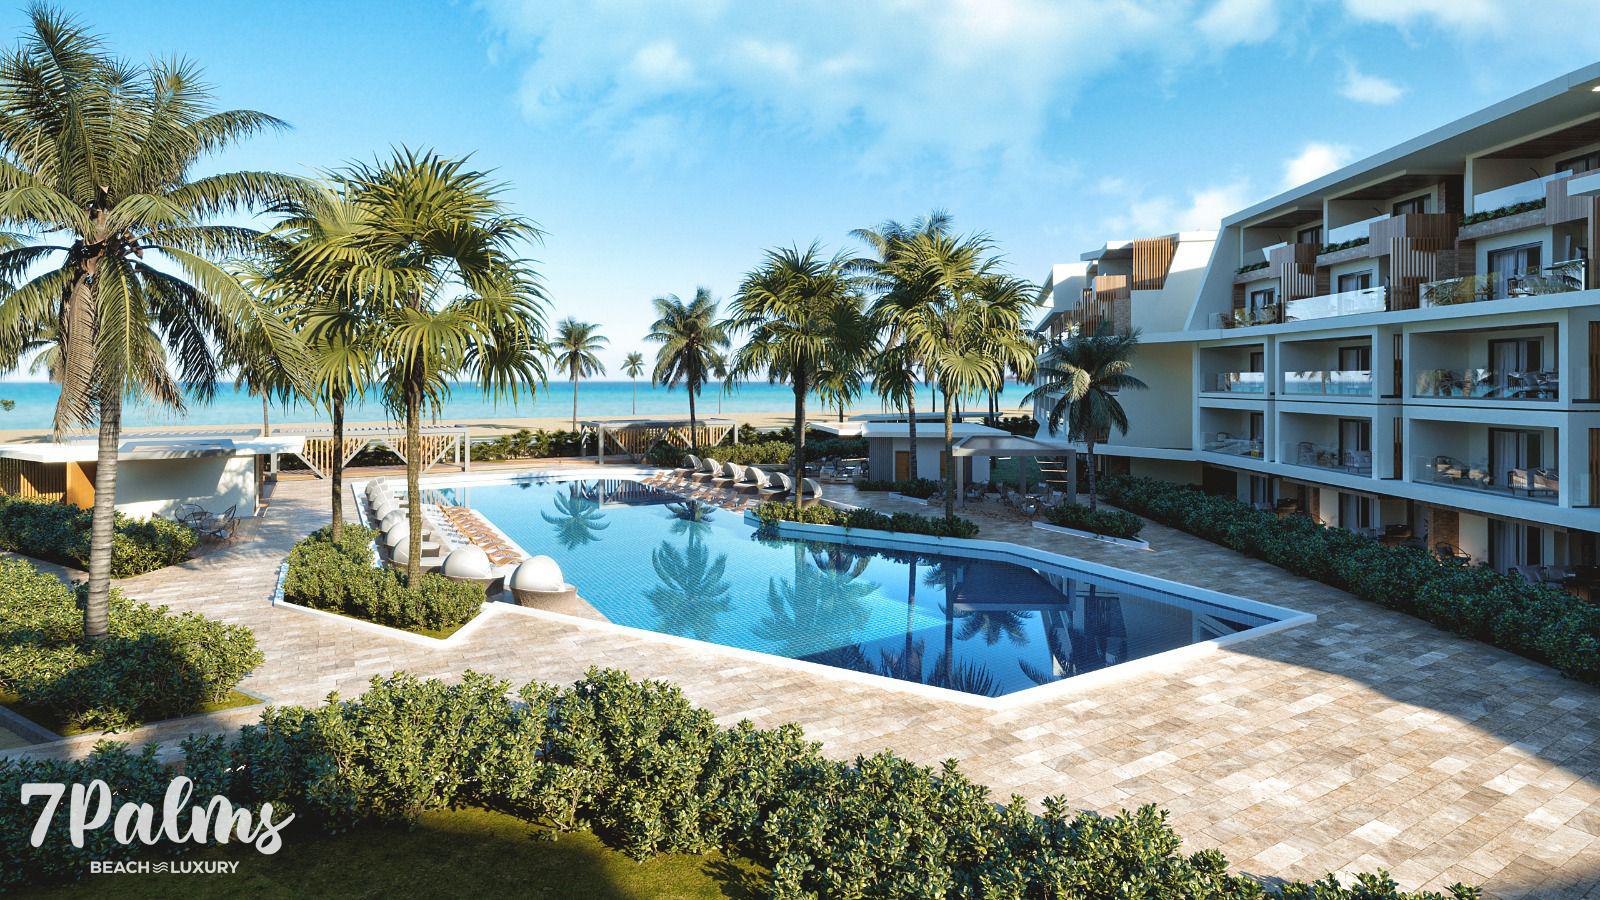 apartamentos - 7 Palms Beach Luxury Espectacular Proyecto en Venta Punta Cana. 0